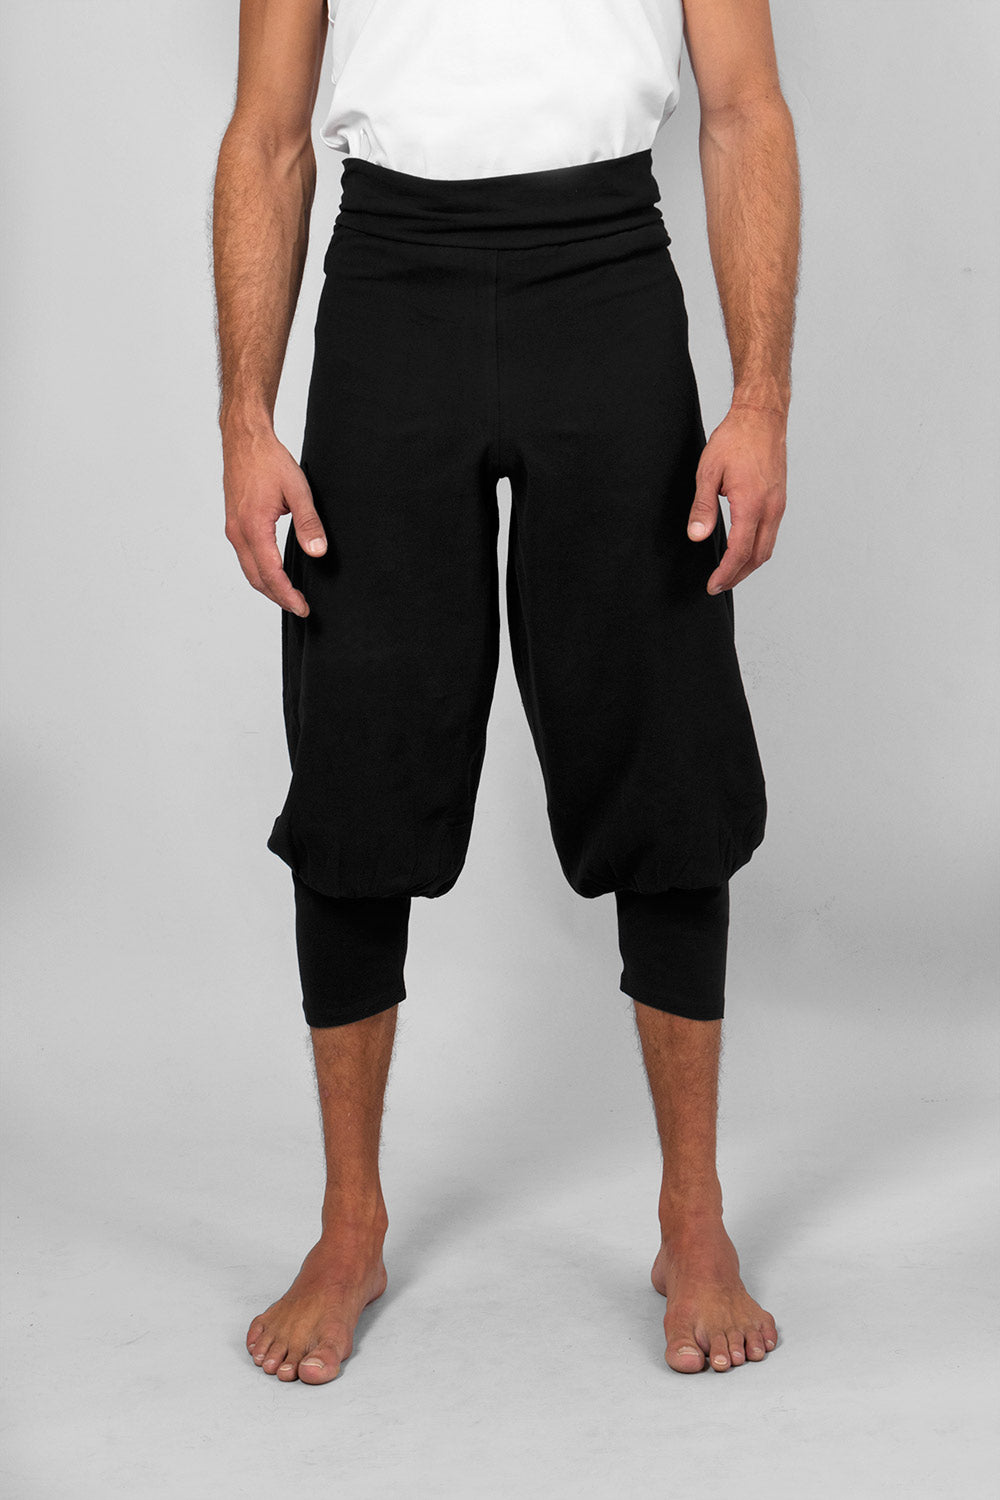 Sadhak Herren-Yoga-Shorts - Schwarz